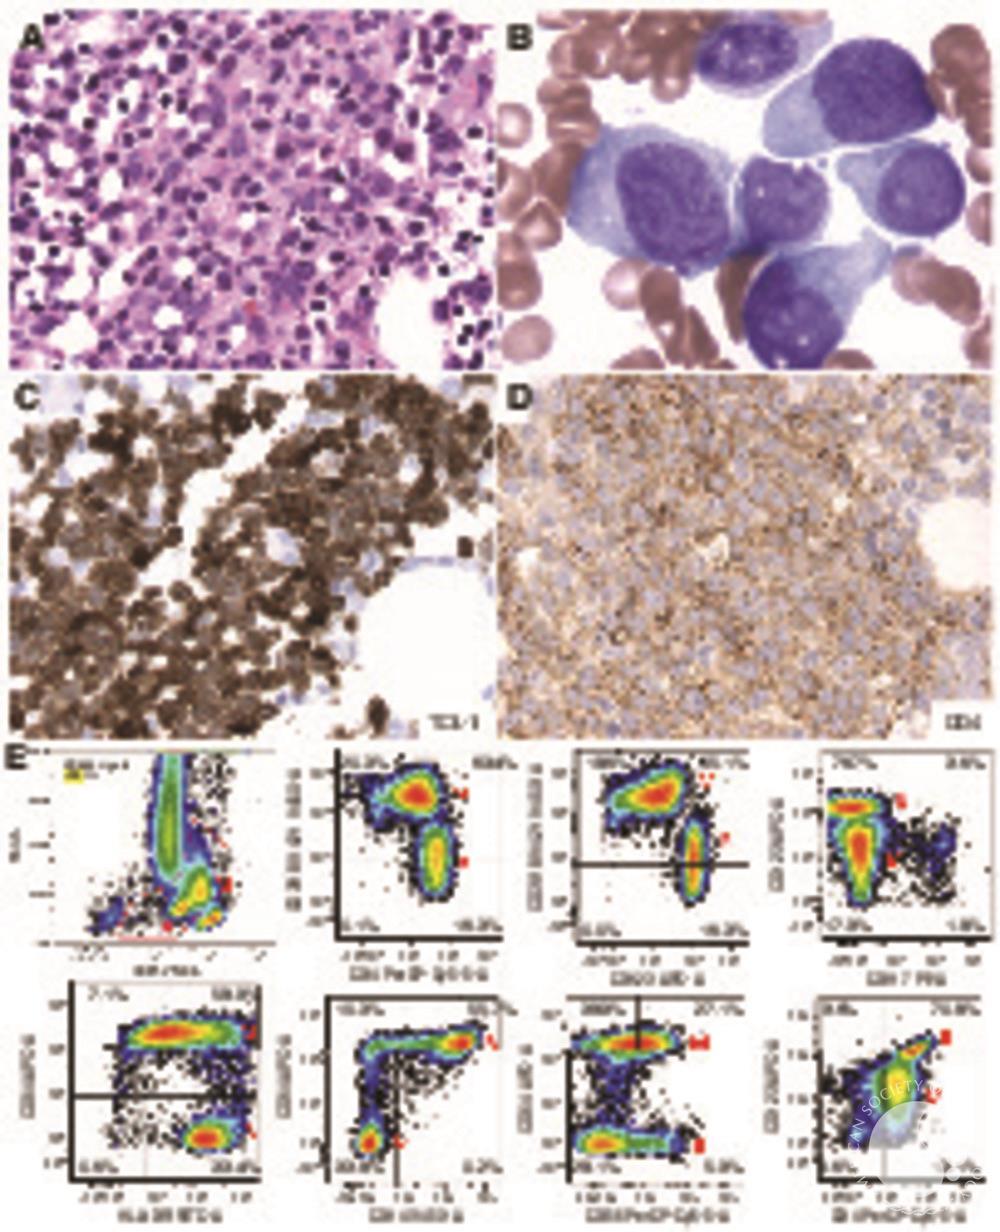 Blastic plasmacytoid dendritic cell neoplasm associated with chronic myelomonocytic leukemia